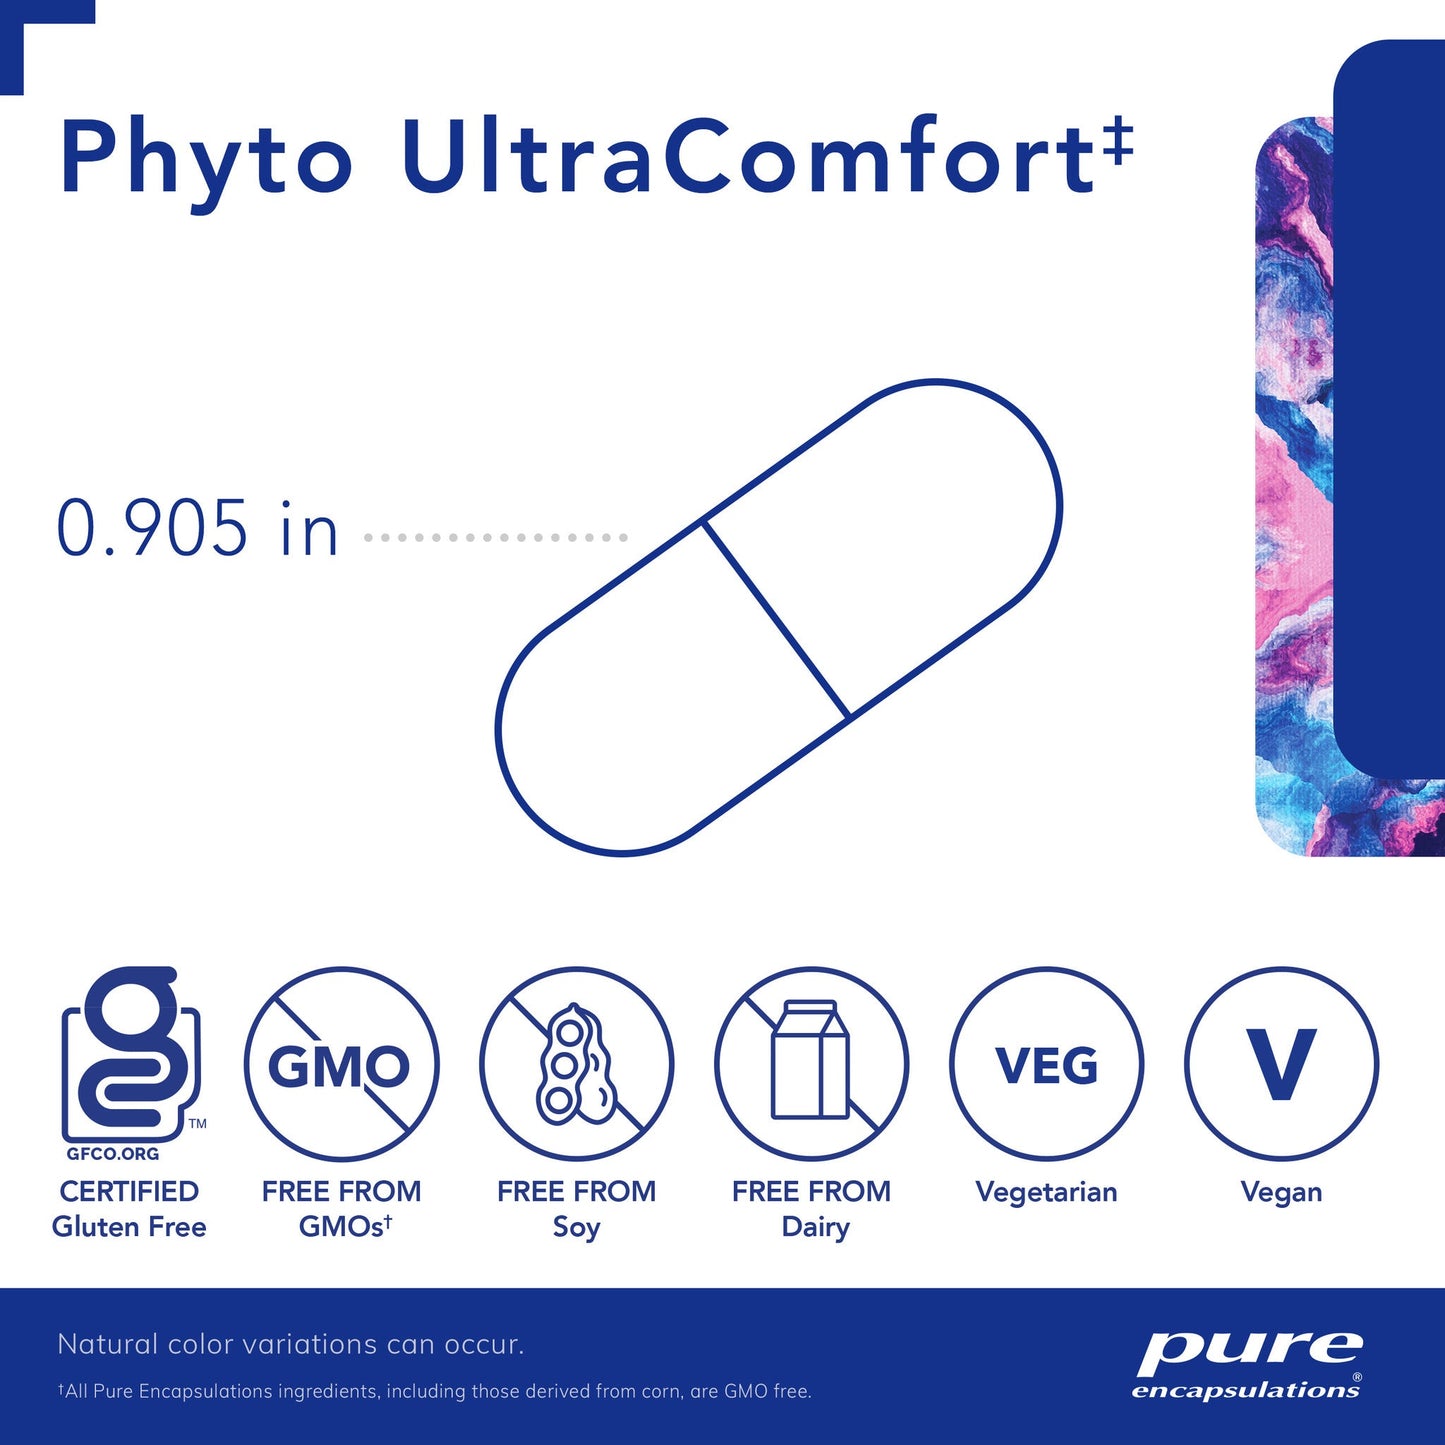 Phyto UltraComfort